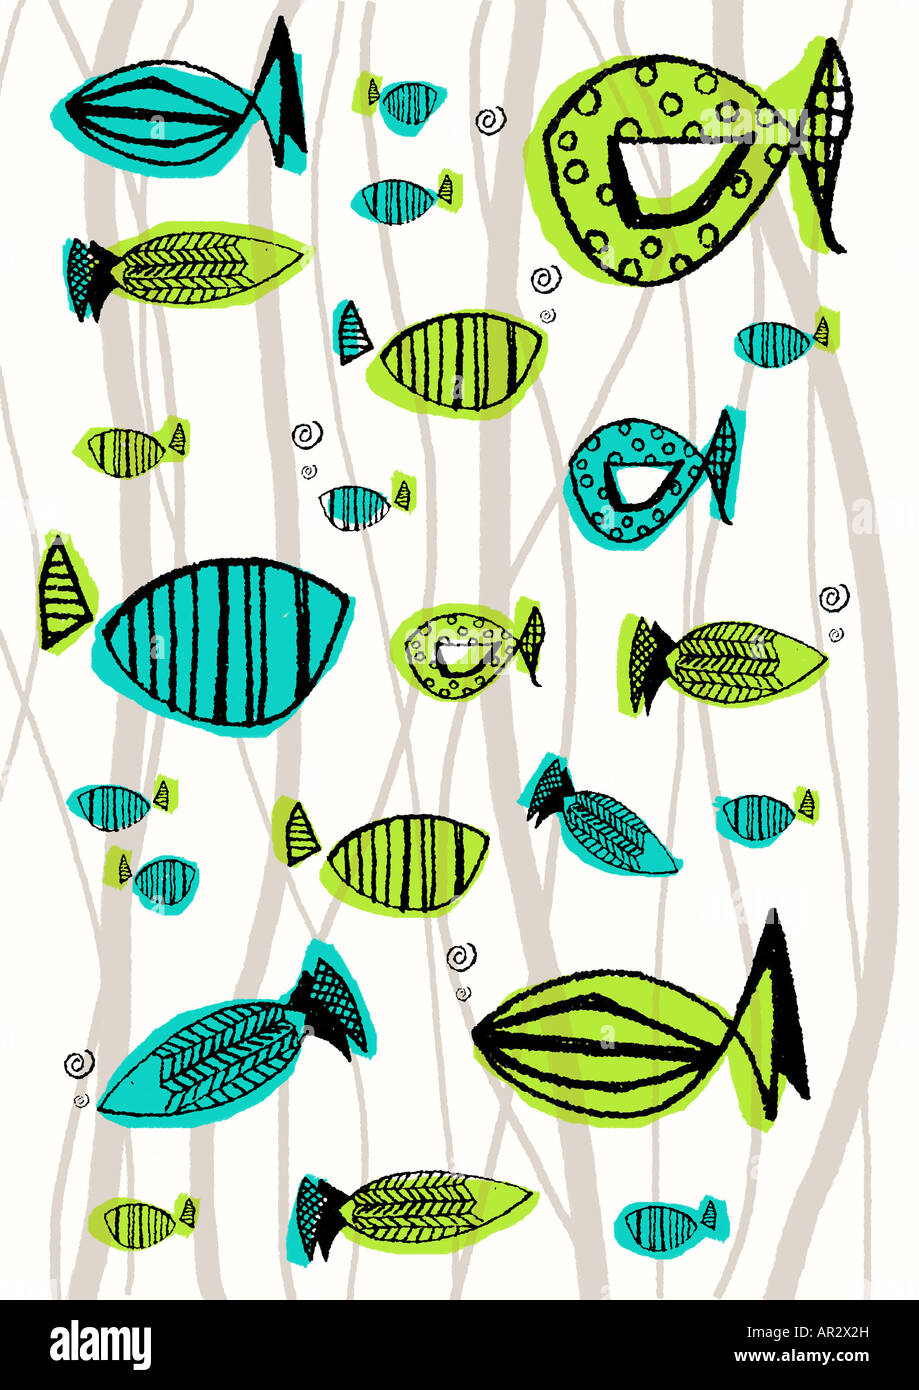 Retro style Illustration of fish Stock Photo